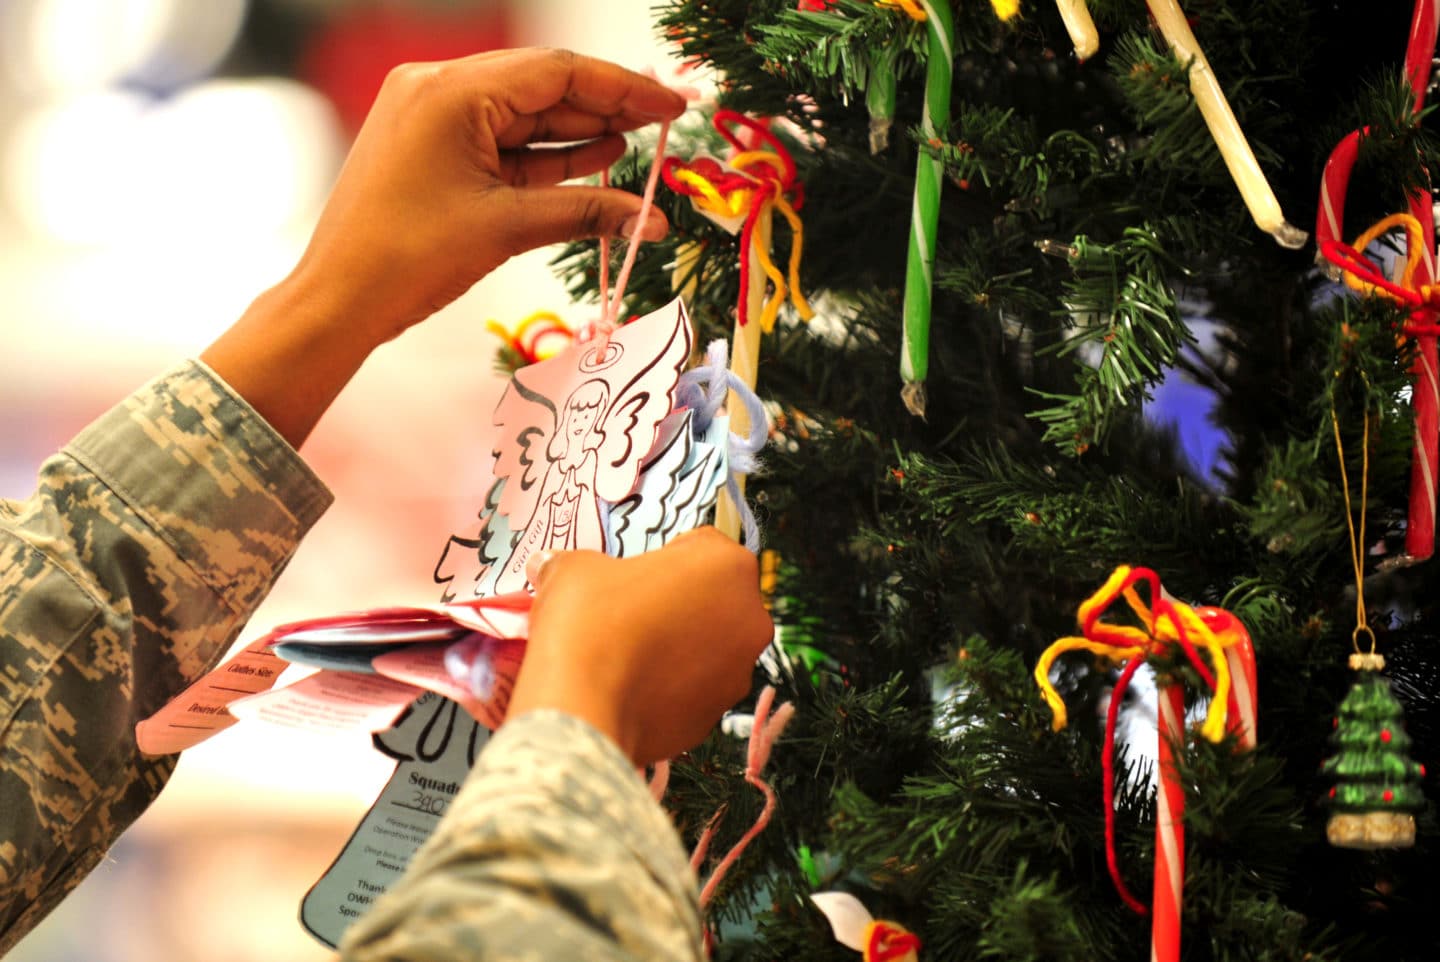 Decorating the Christmas tree